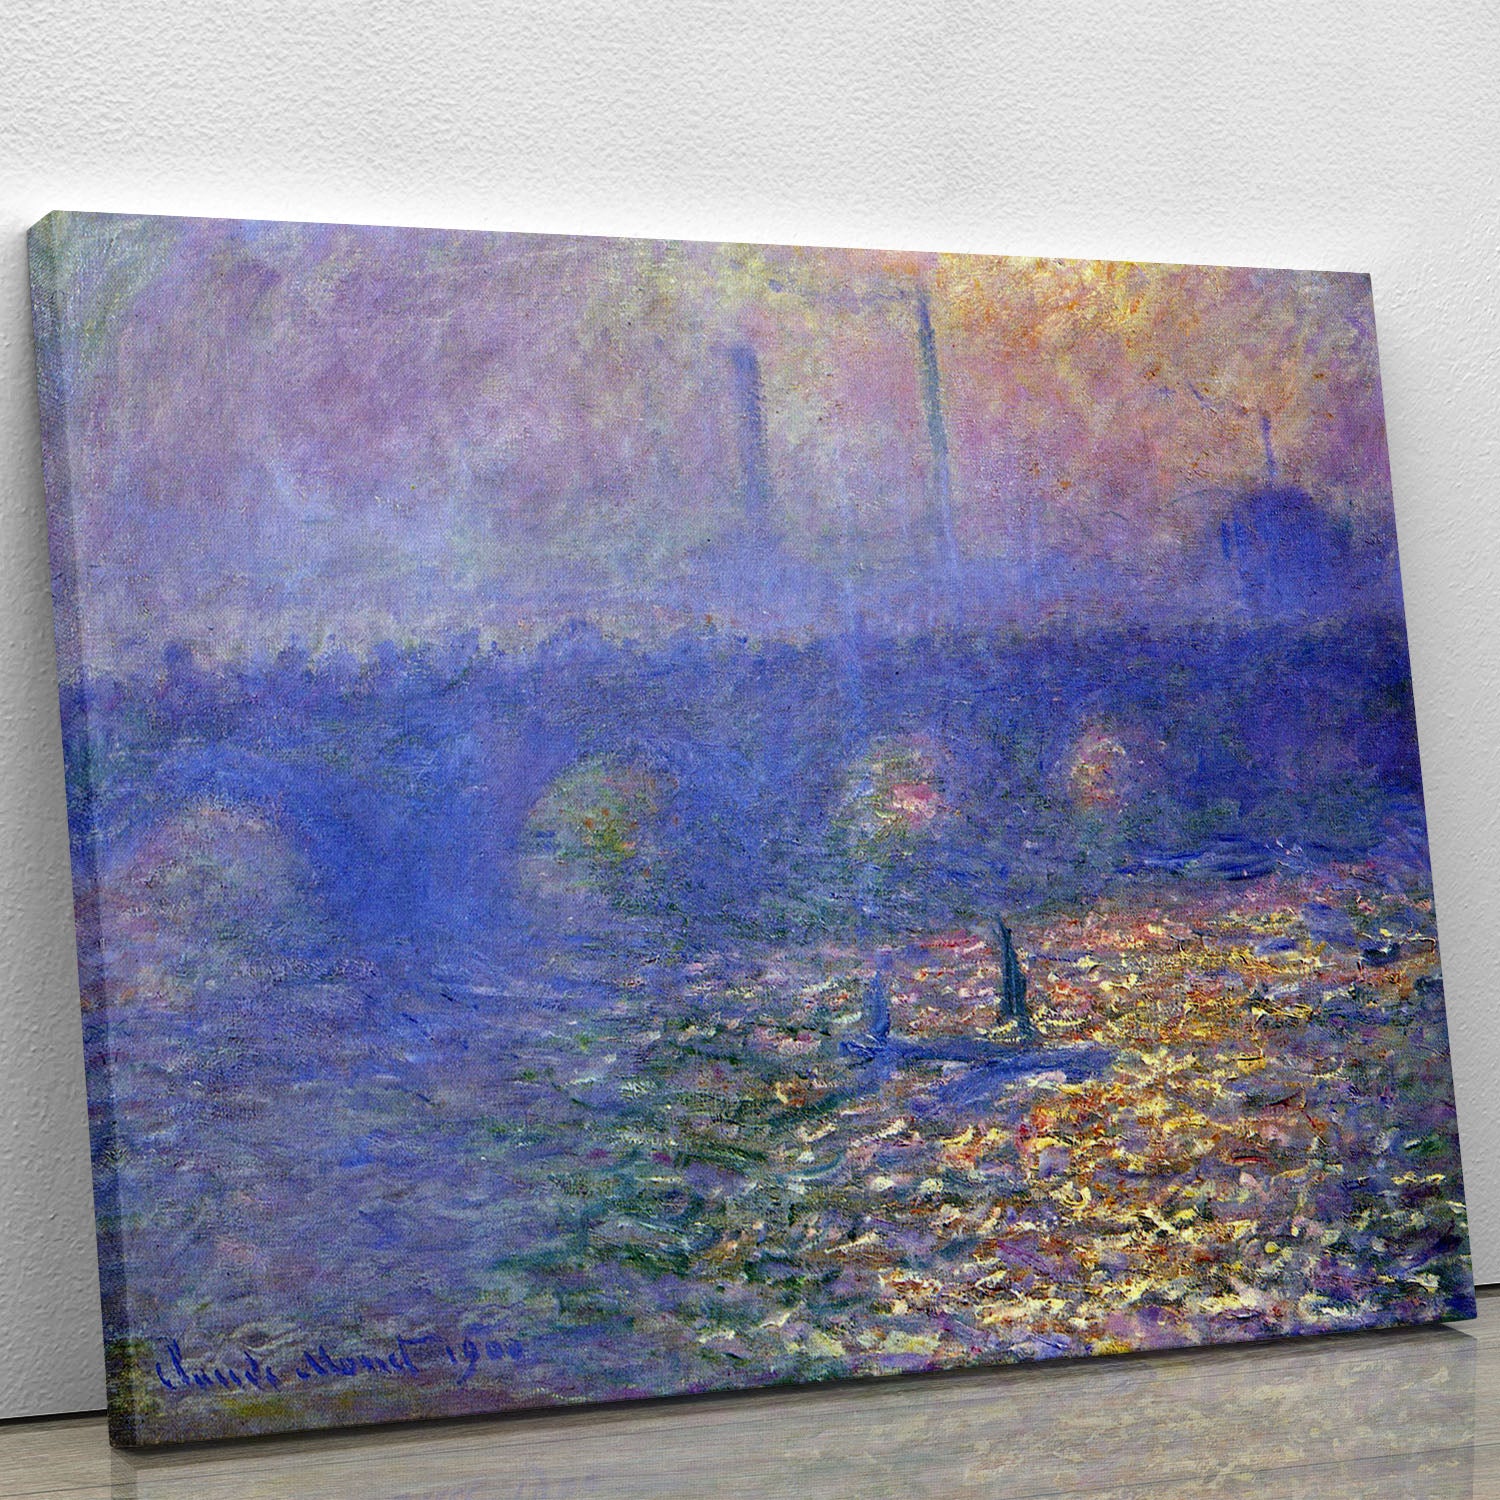 Waterloo Bridge by Monet Canvas Print or Poster - Canvas Art Rocks - 1